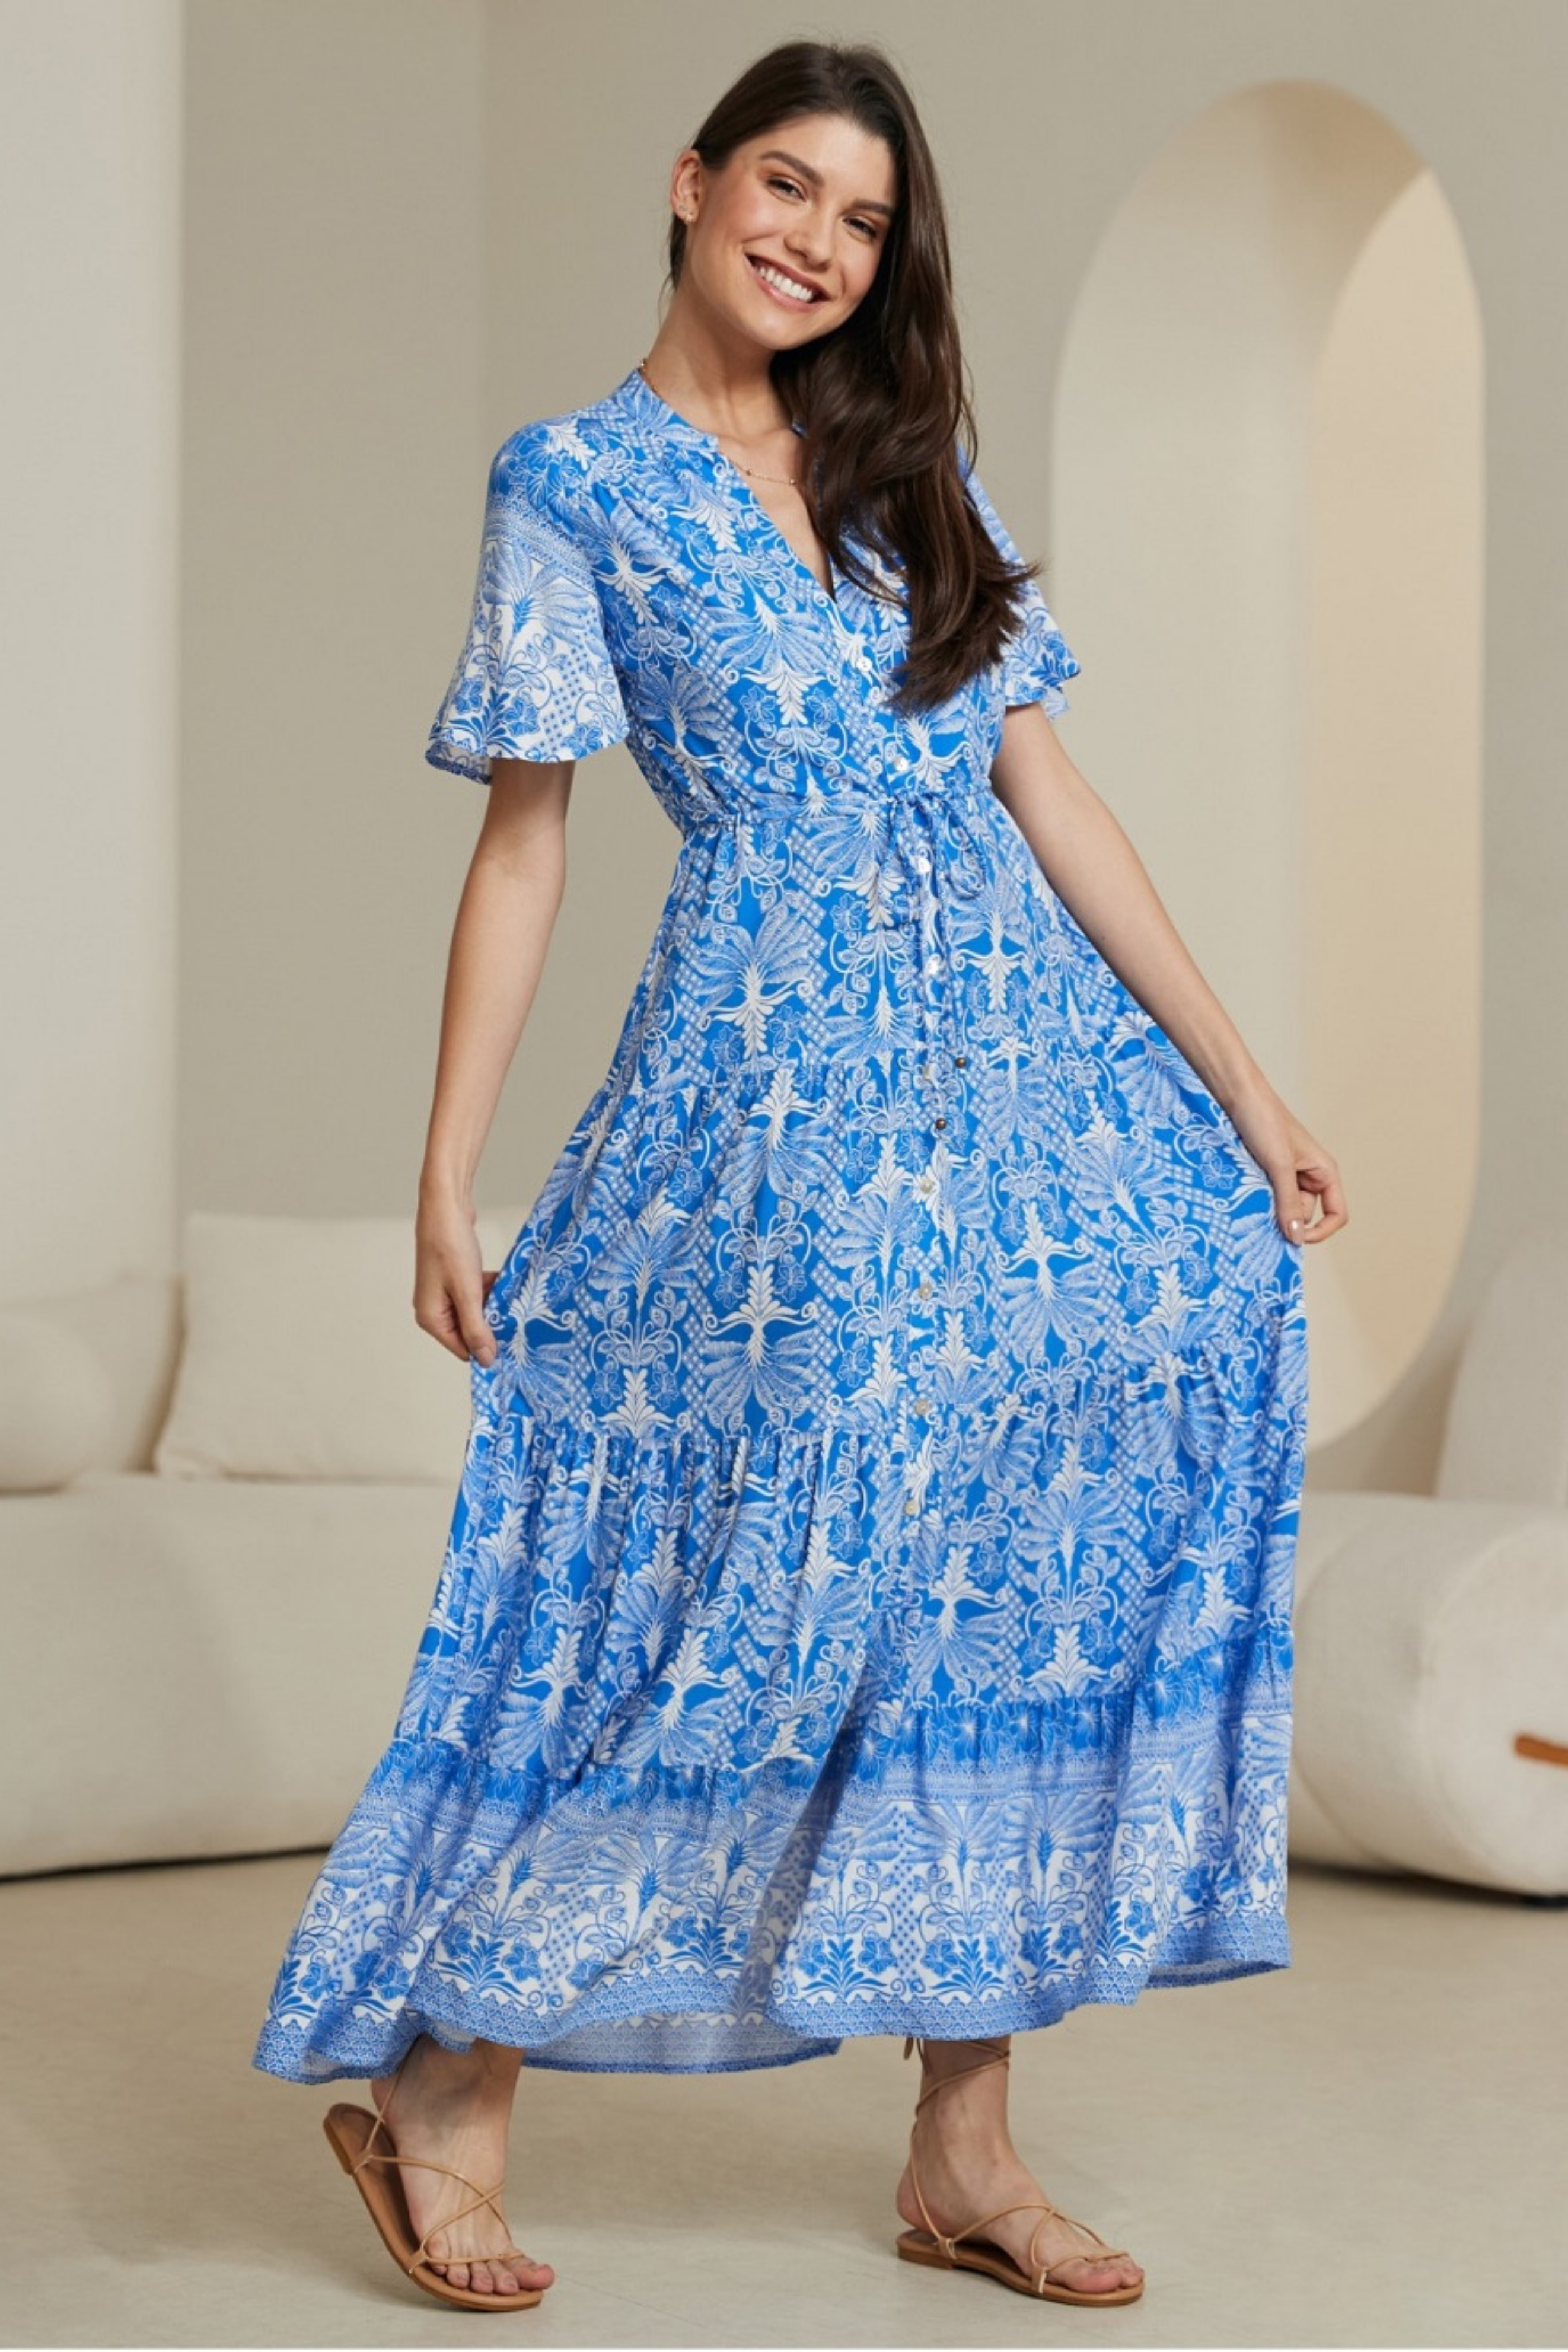 DAHLIA Maxi Dress in Blue Floral